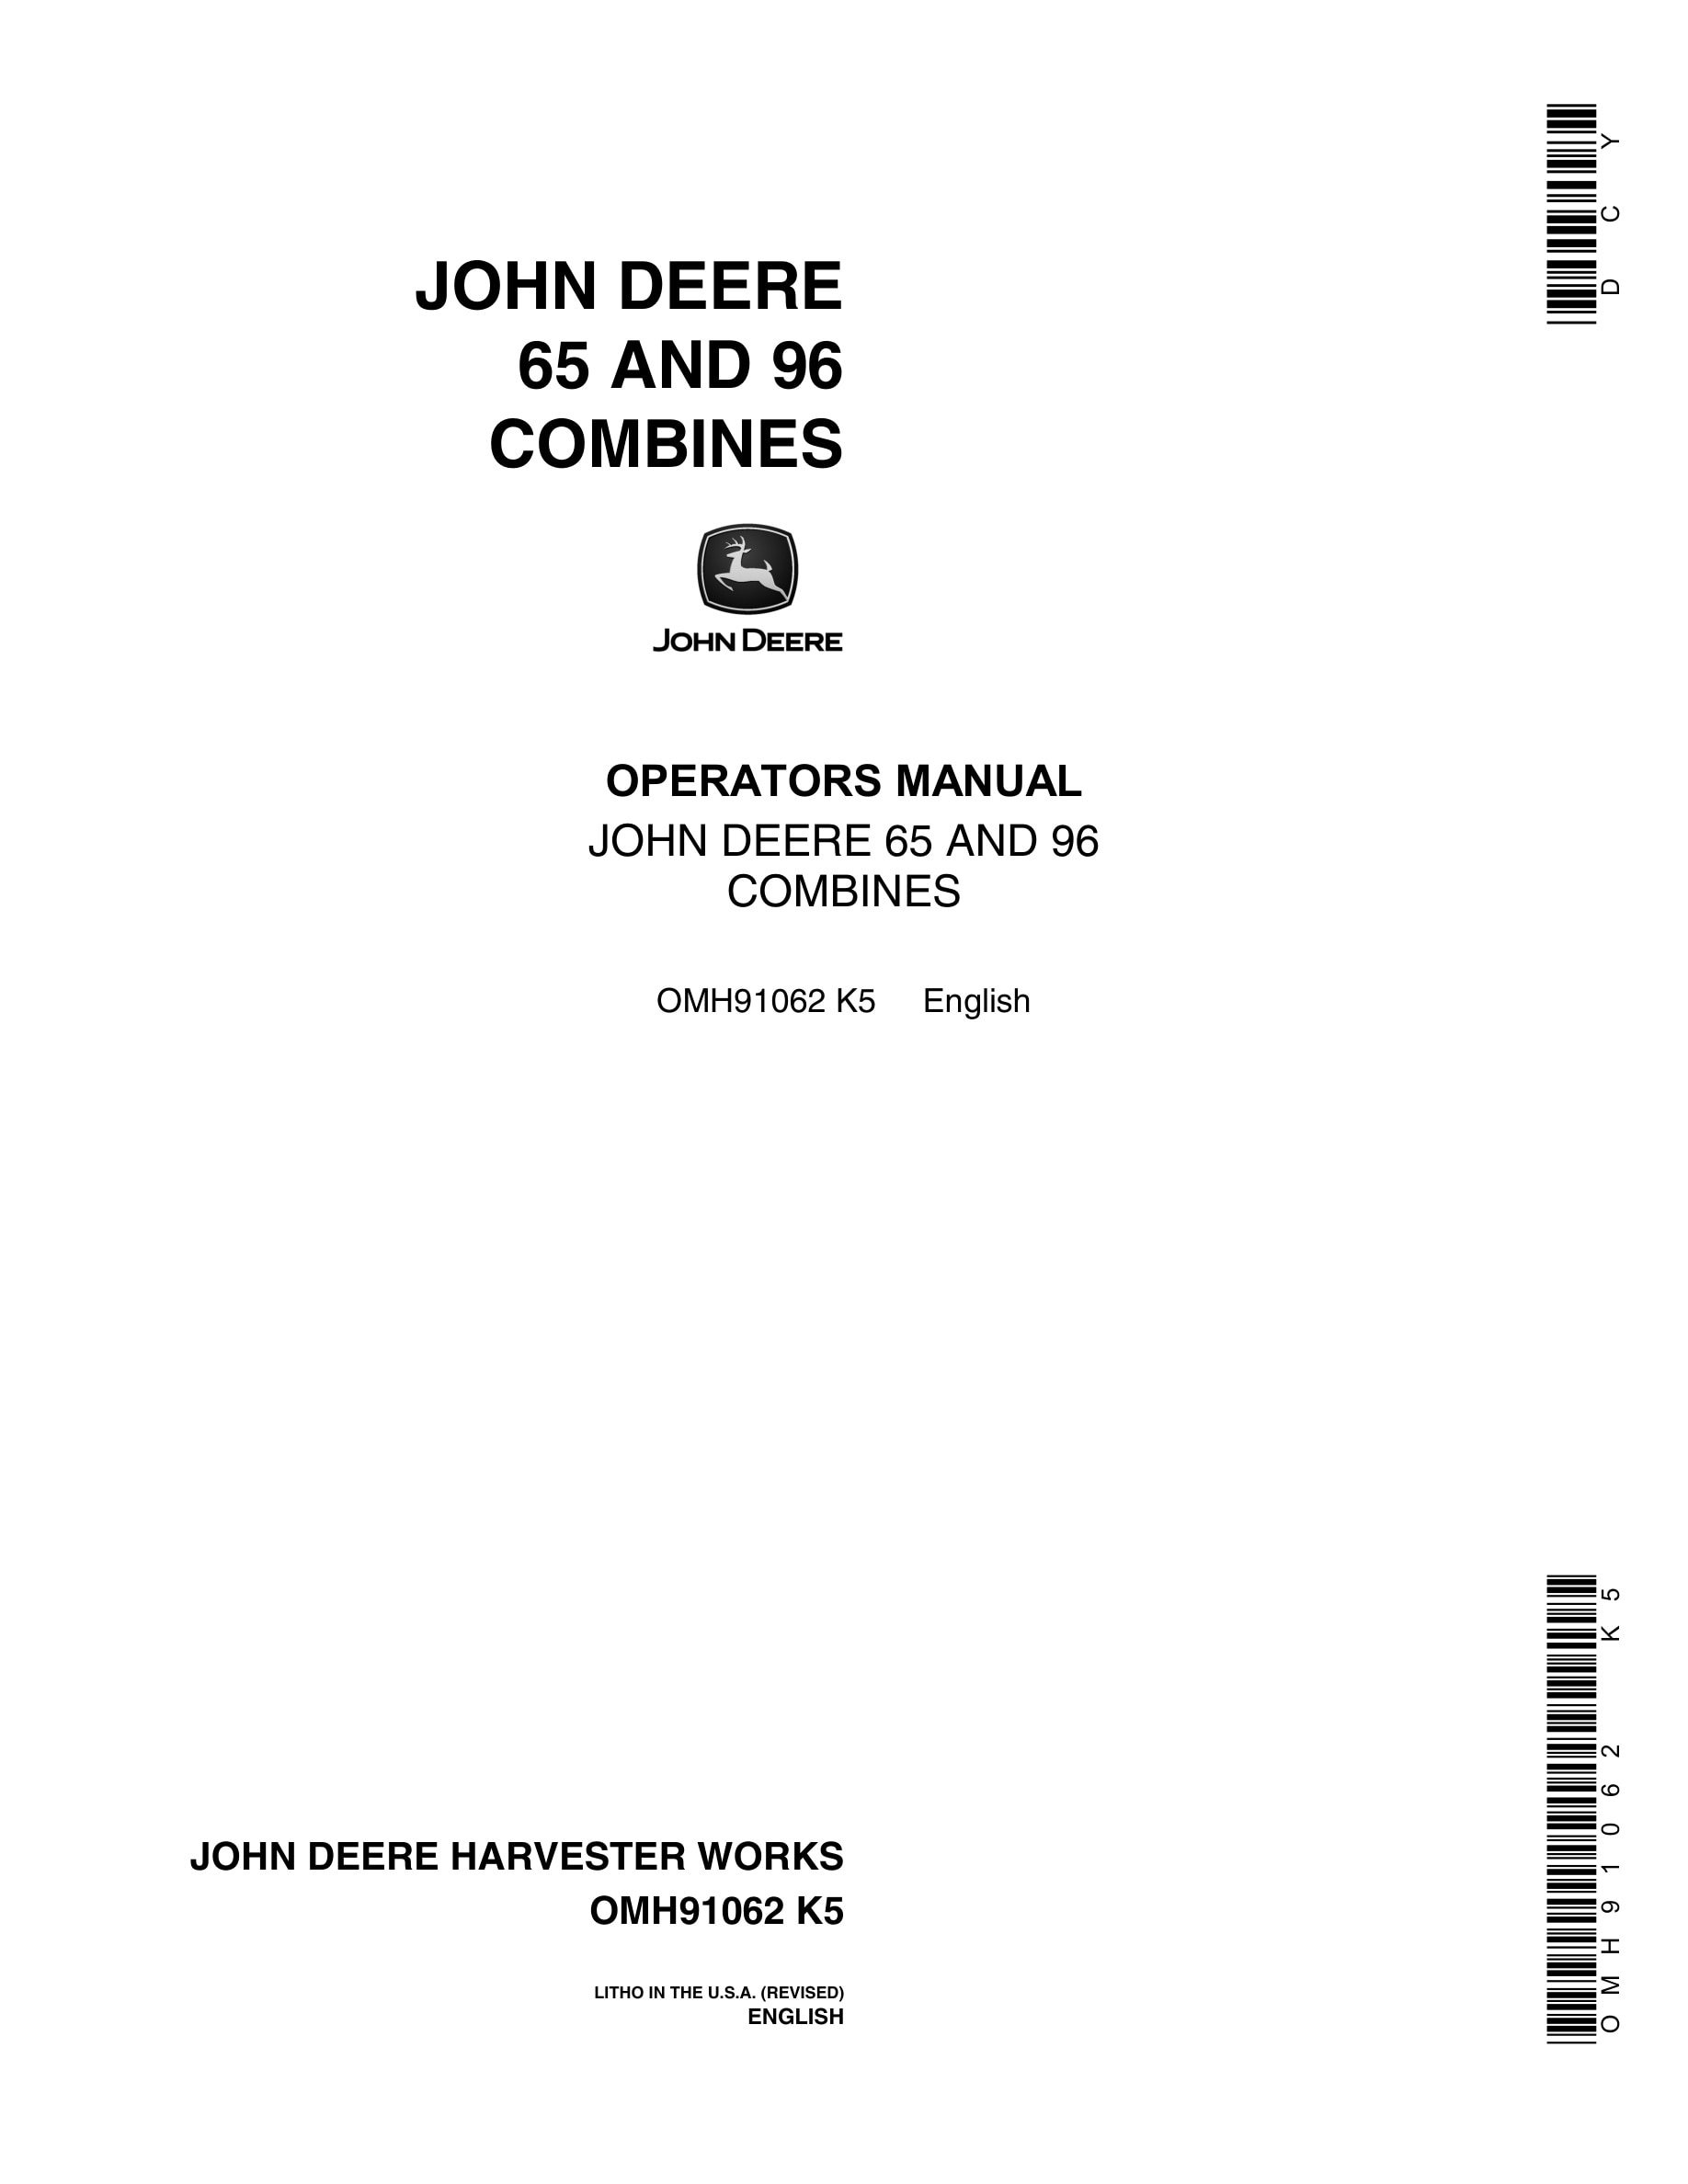 John Deere 65 AND 96 Combine Operator Manual SOMH91062-1